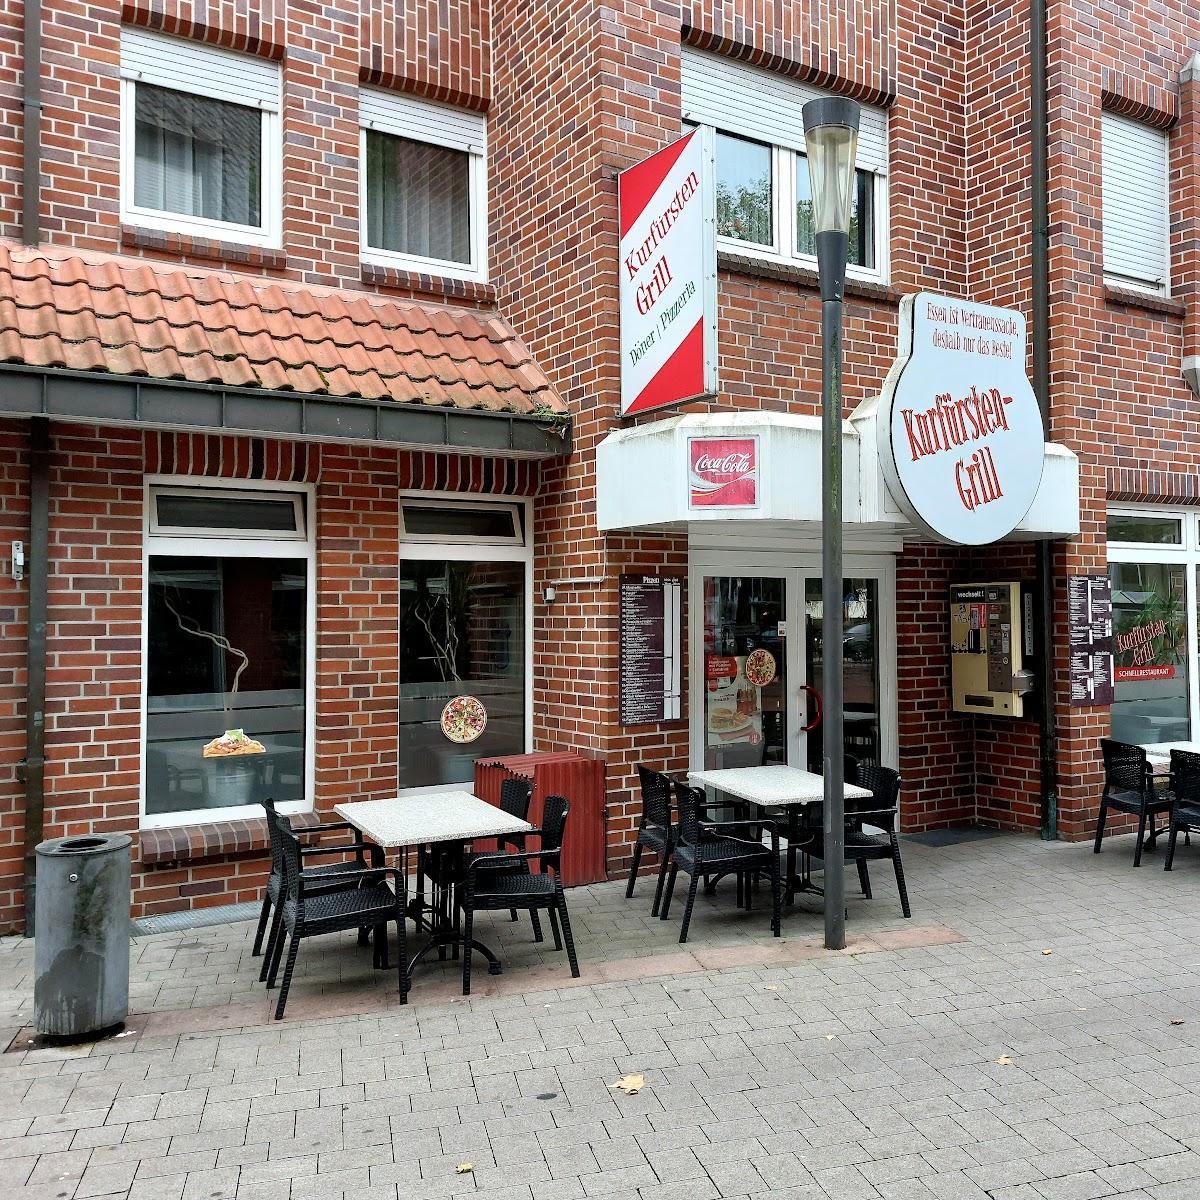 Restaurant "Kurfürsten Grill pizza & Döner" in Ahaus